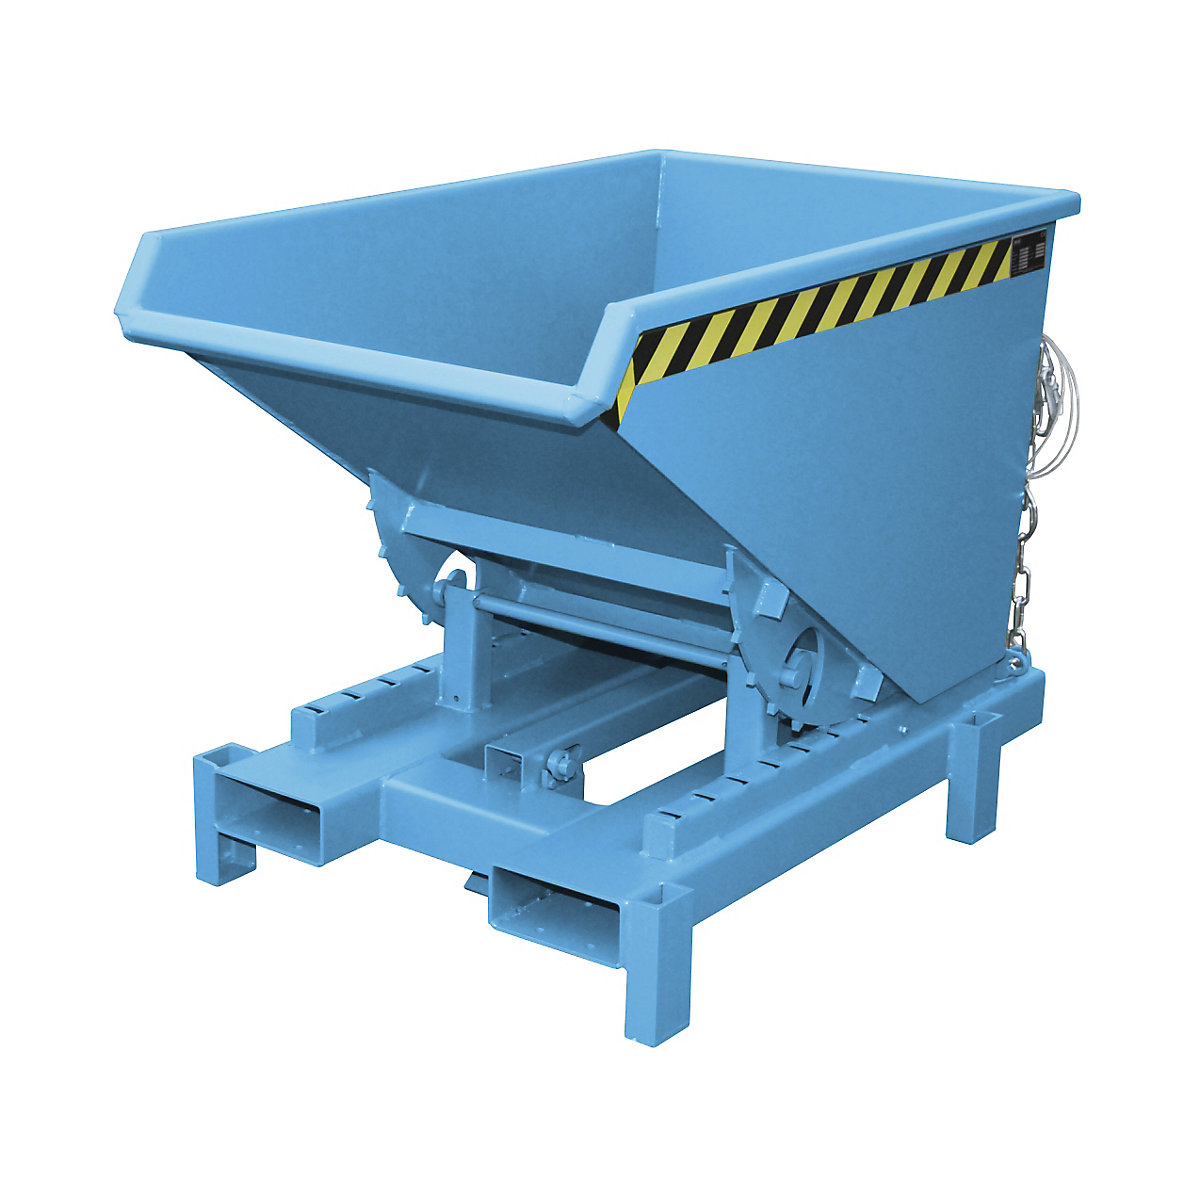 Nagibni spremnik za teške terete – eurokraft pro, volumen 0,6 m³, nosivost 4000 kg, u plavoj boji RAL 5012-8